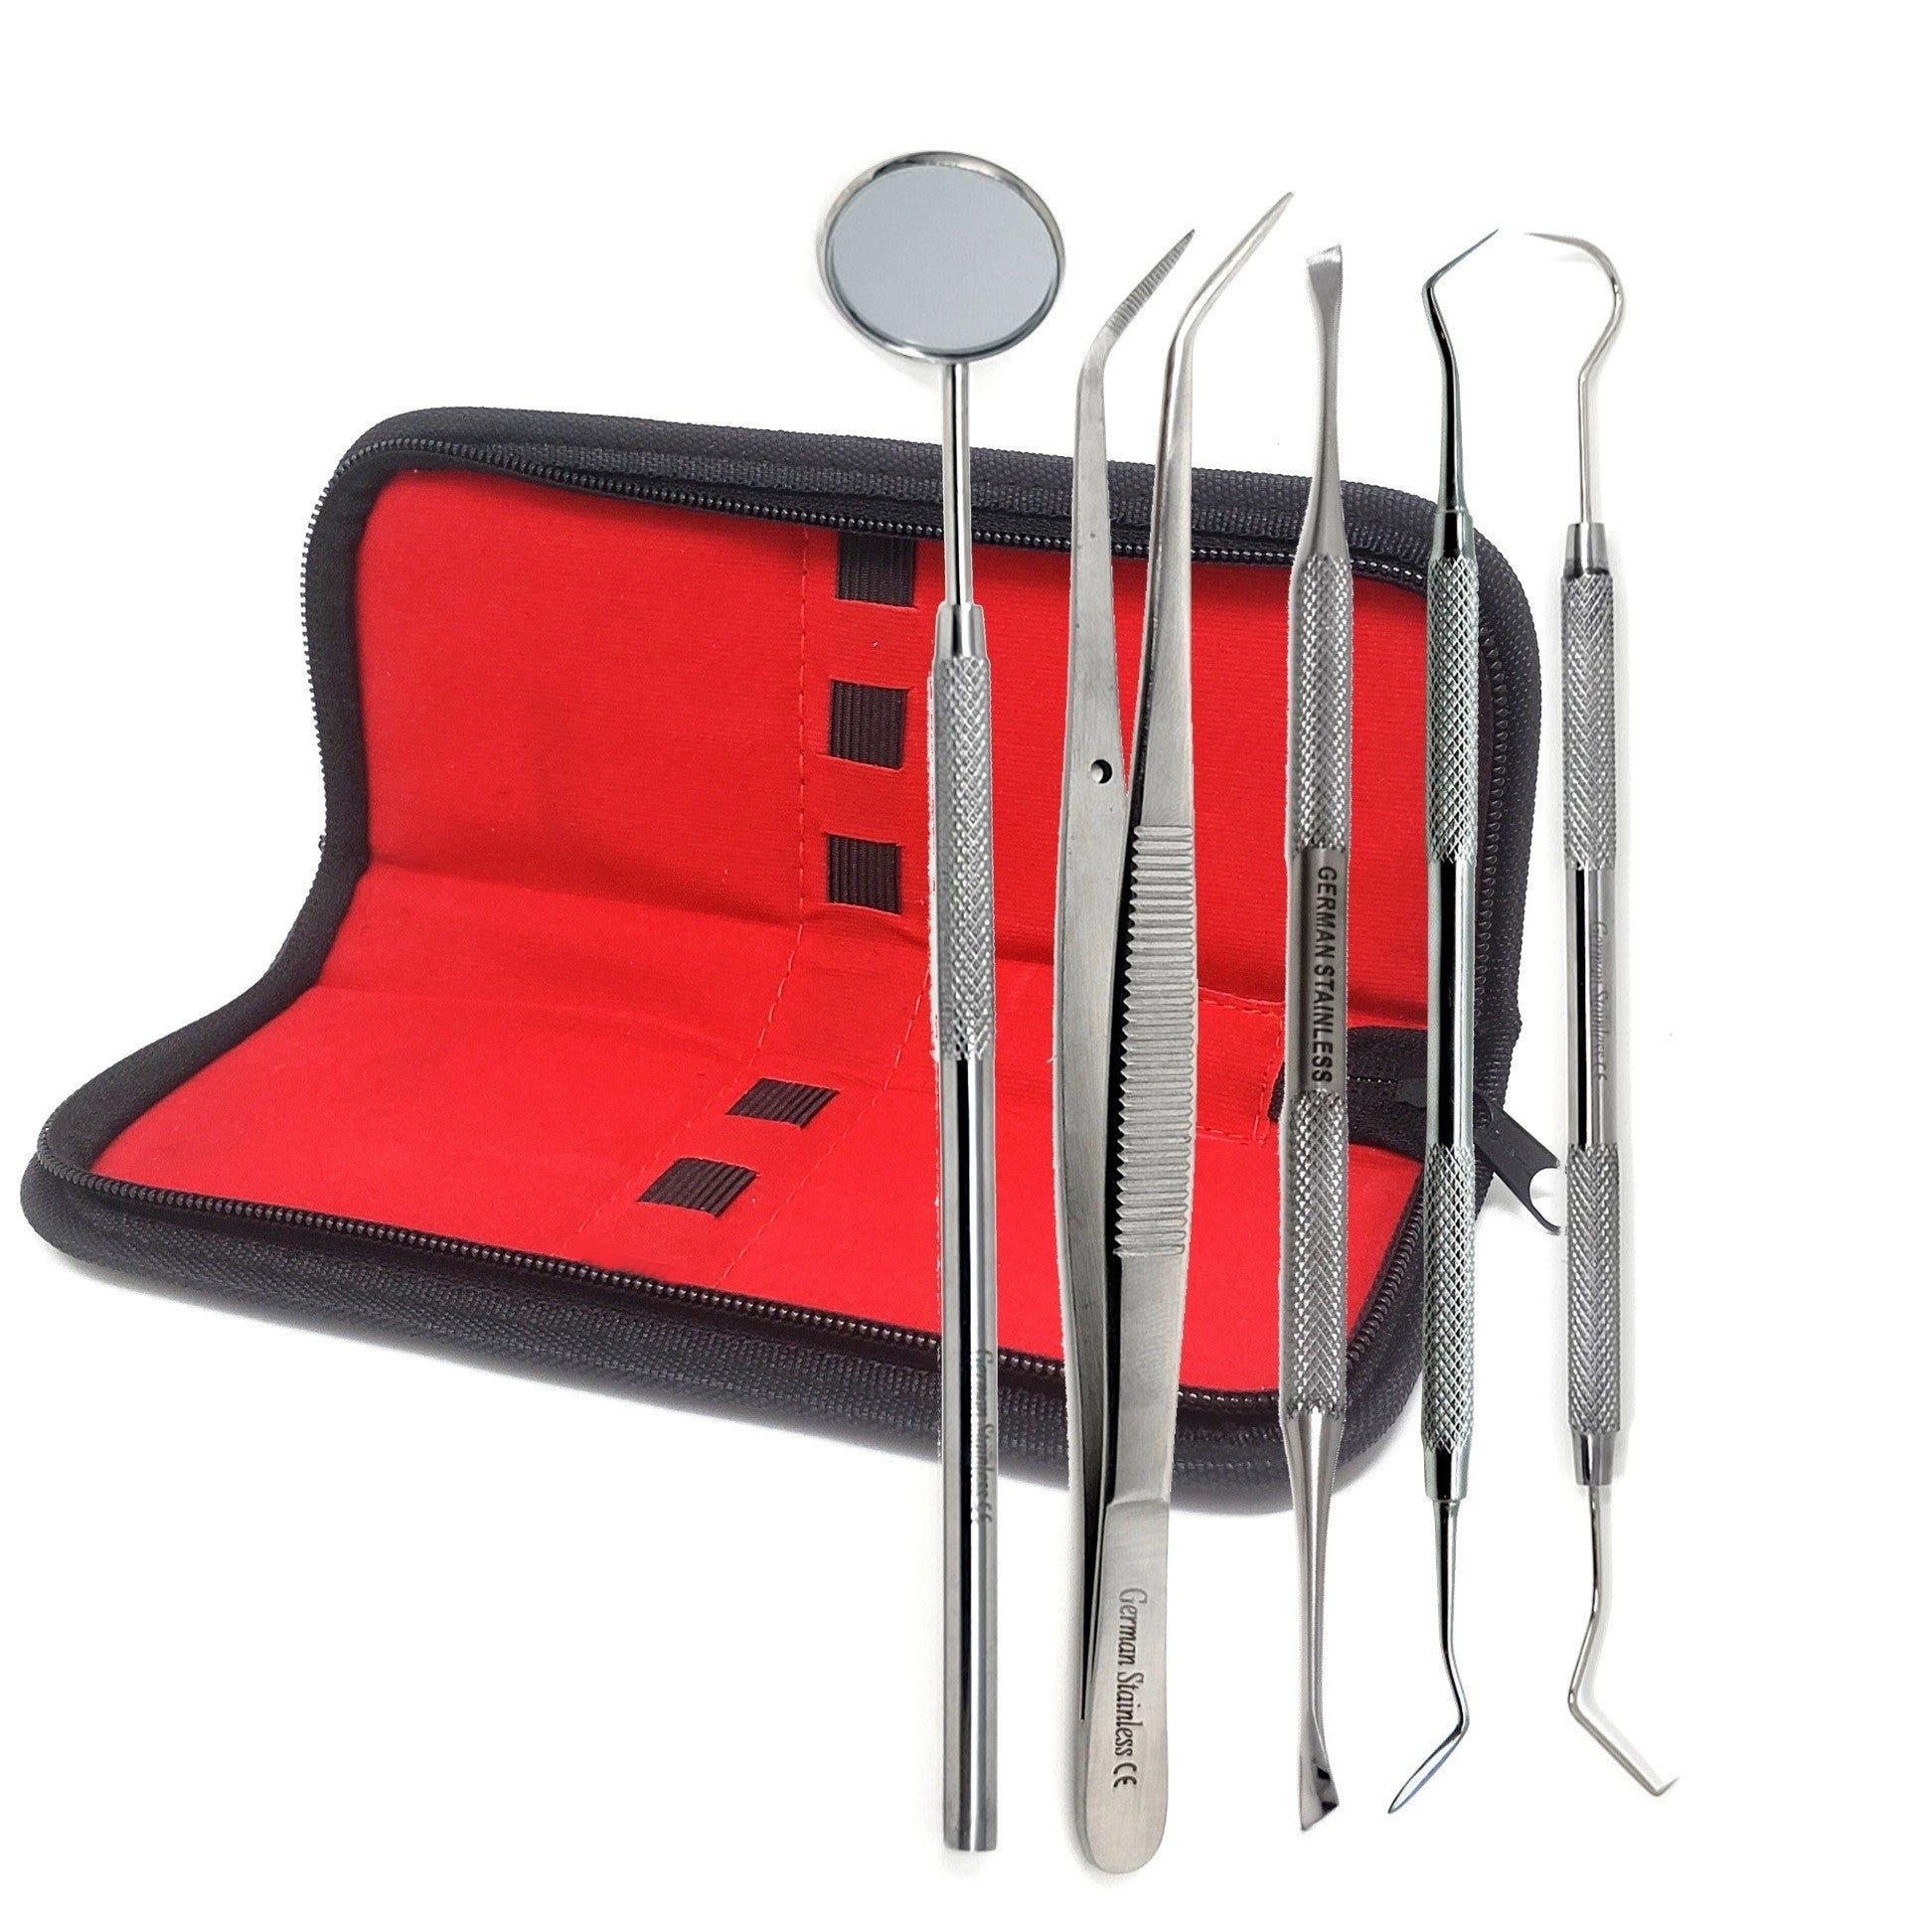 Dentist Tools Kit - Stainless Steel Dental Pick, Scaler, Plaque